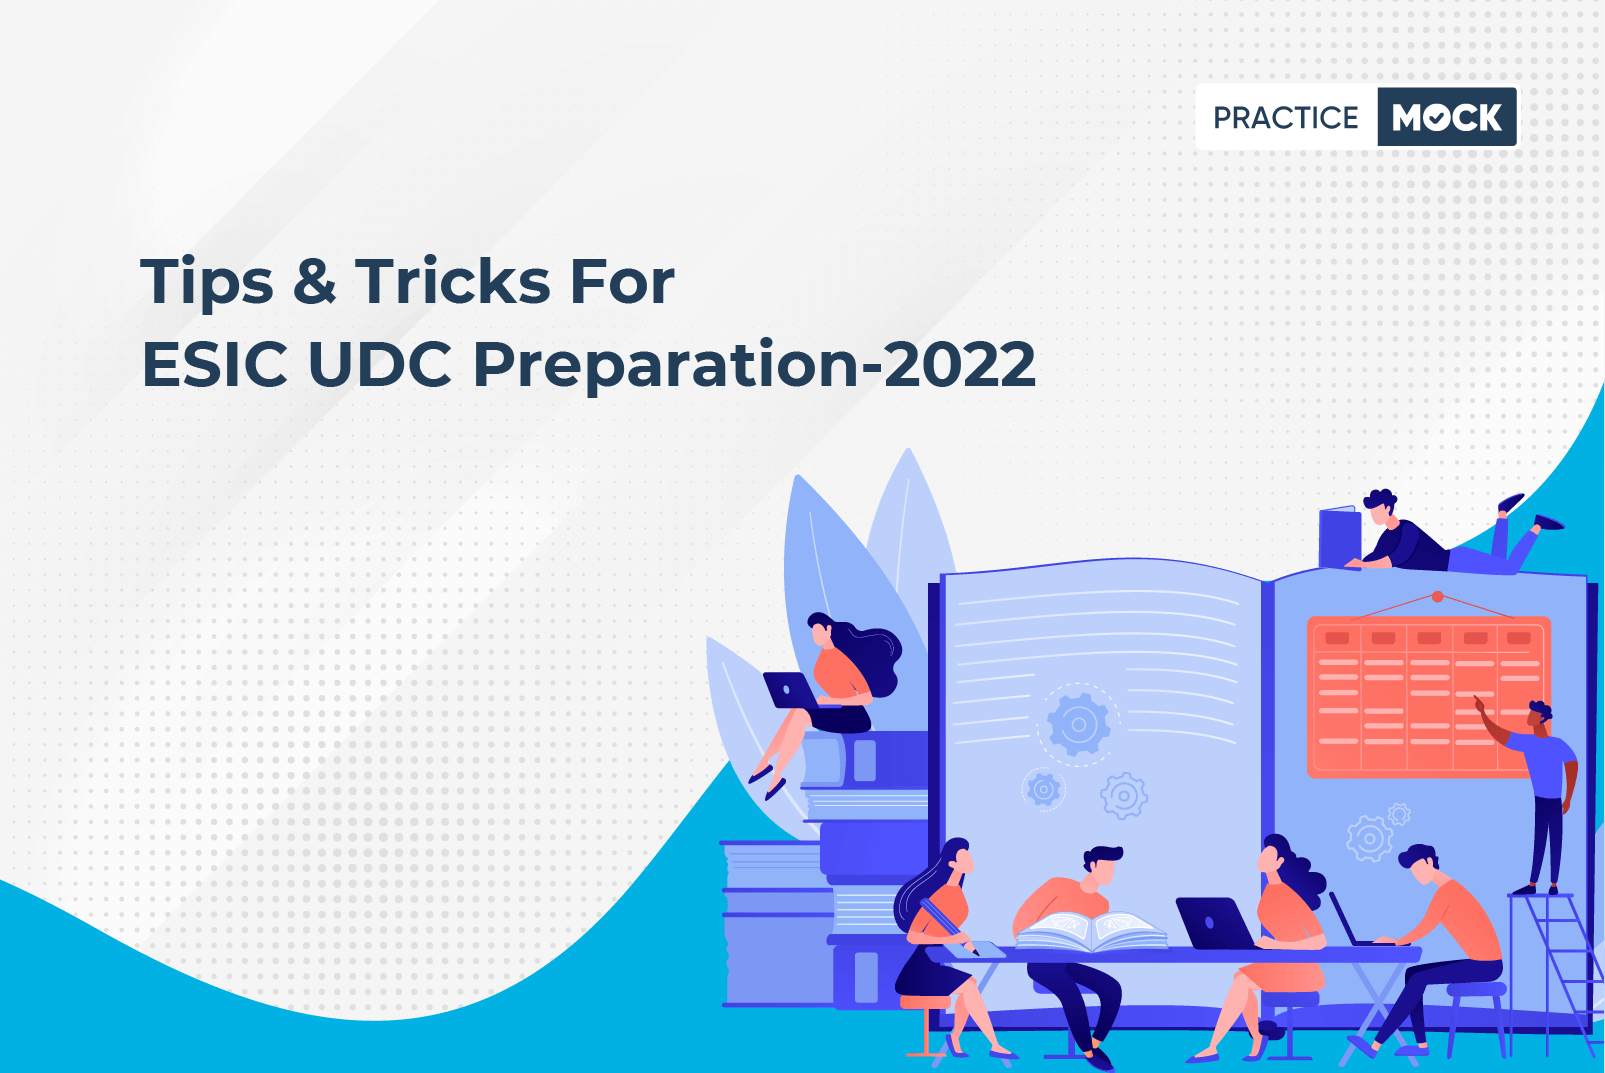 Tips & Tricks For ESIC UDC Preparation-2022